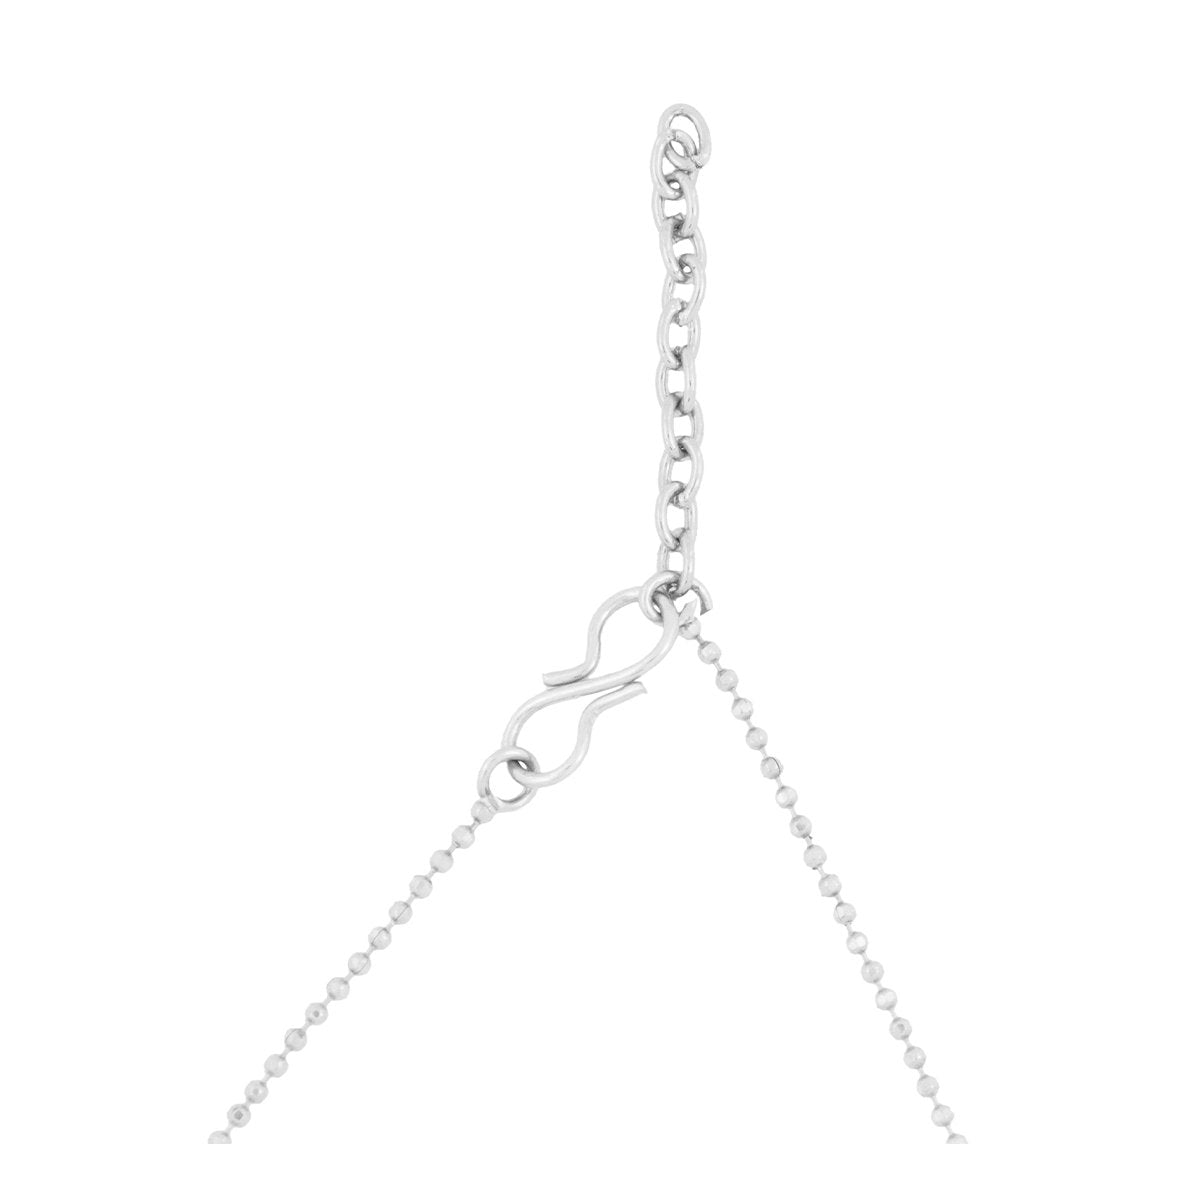 Enamel Cz Flower Black American Diamond Pearl Necklace Pendant Chain